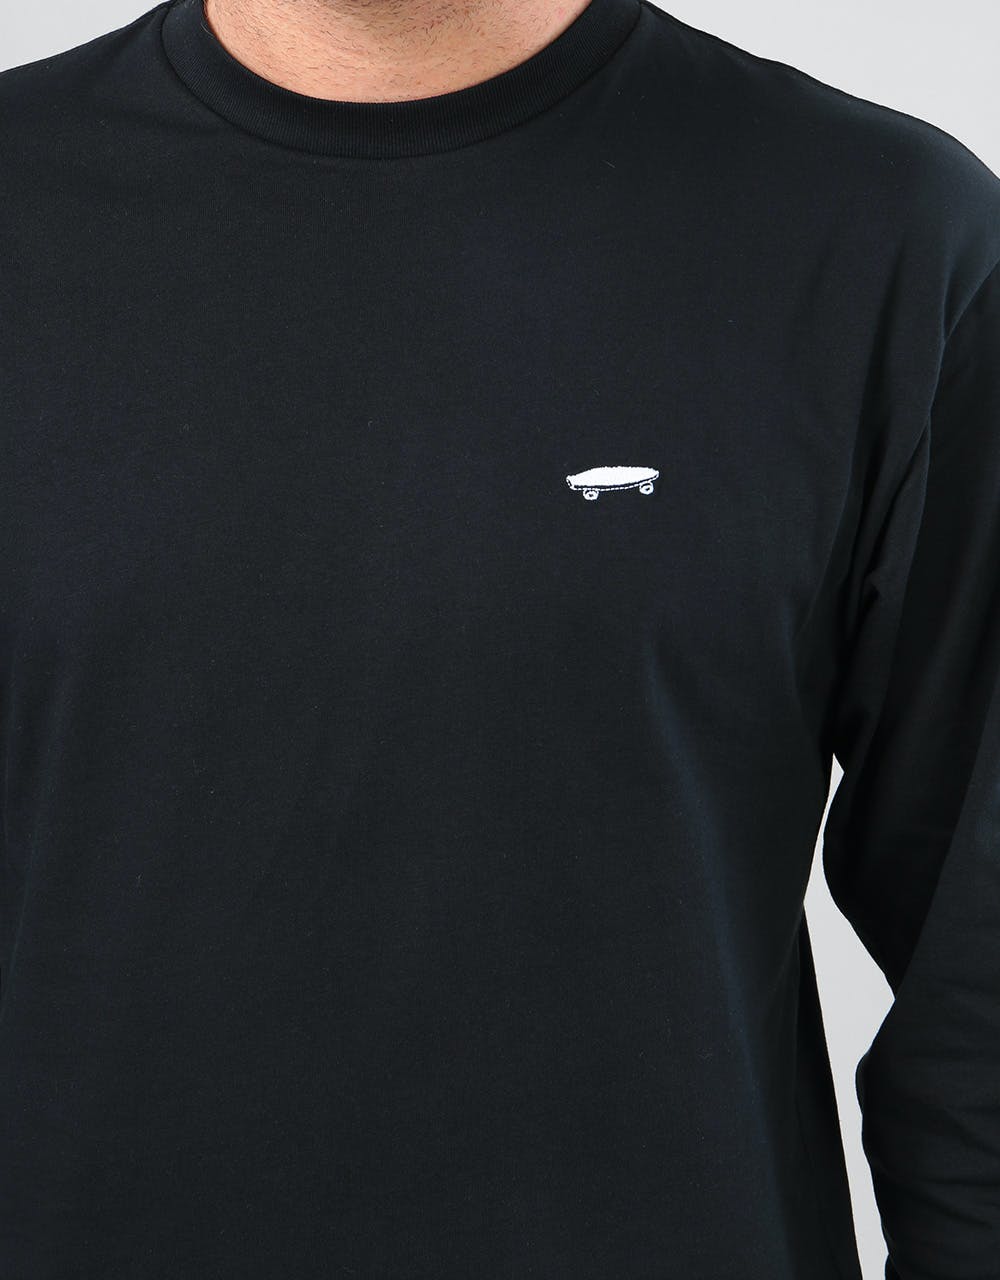 Vans Skate L/S T-Shirt - Black